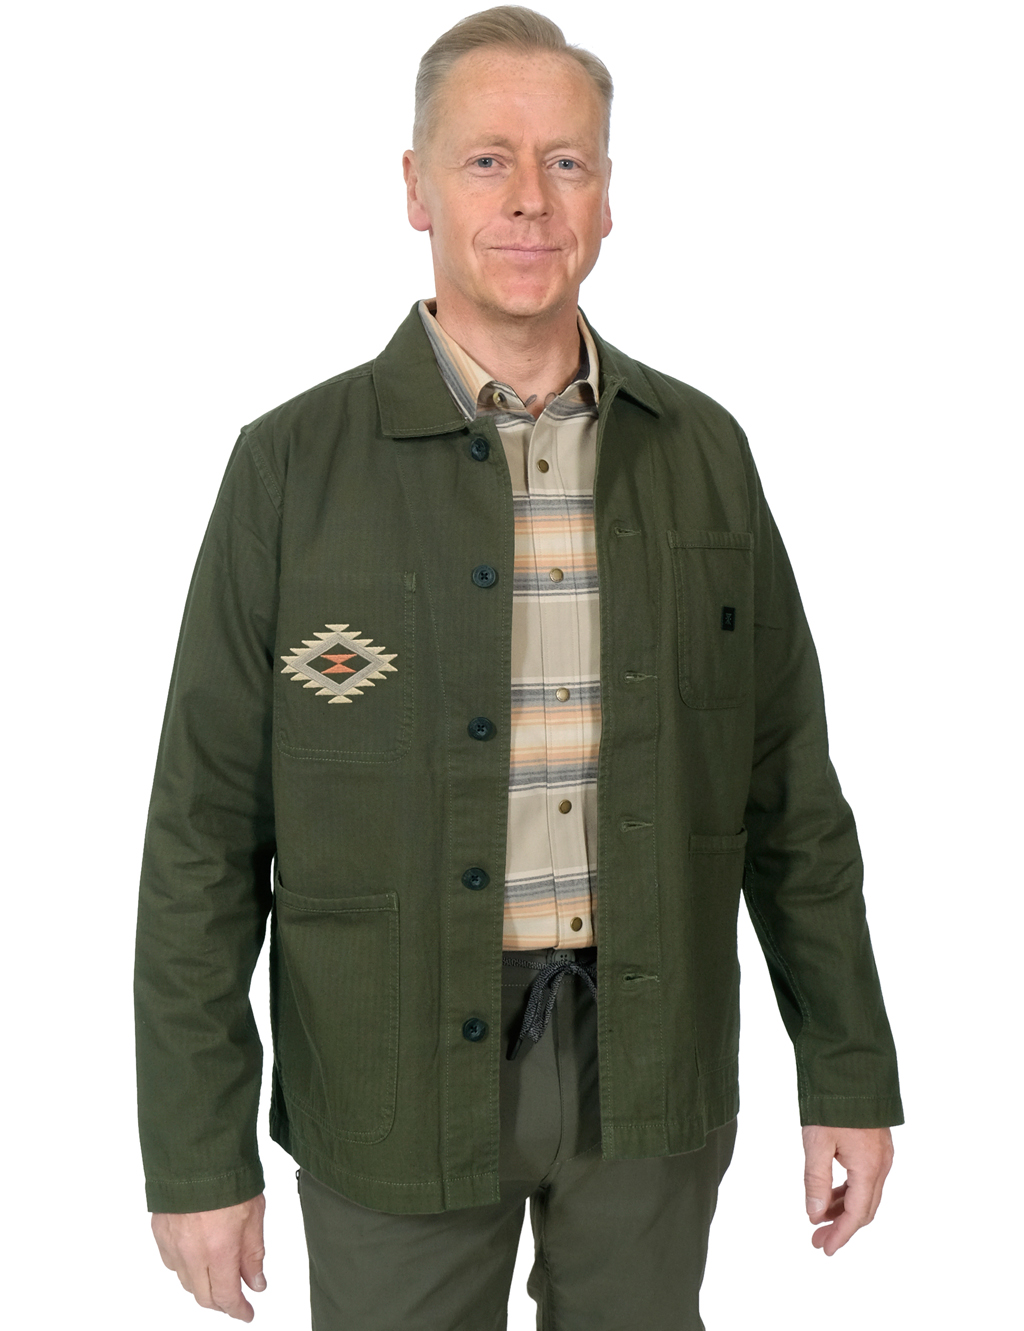 Roark - Atlas Embroidery Organic Chore Jacket - Dark Military